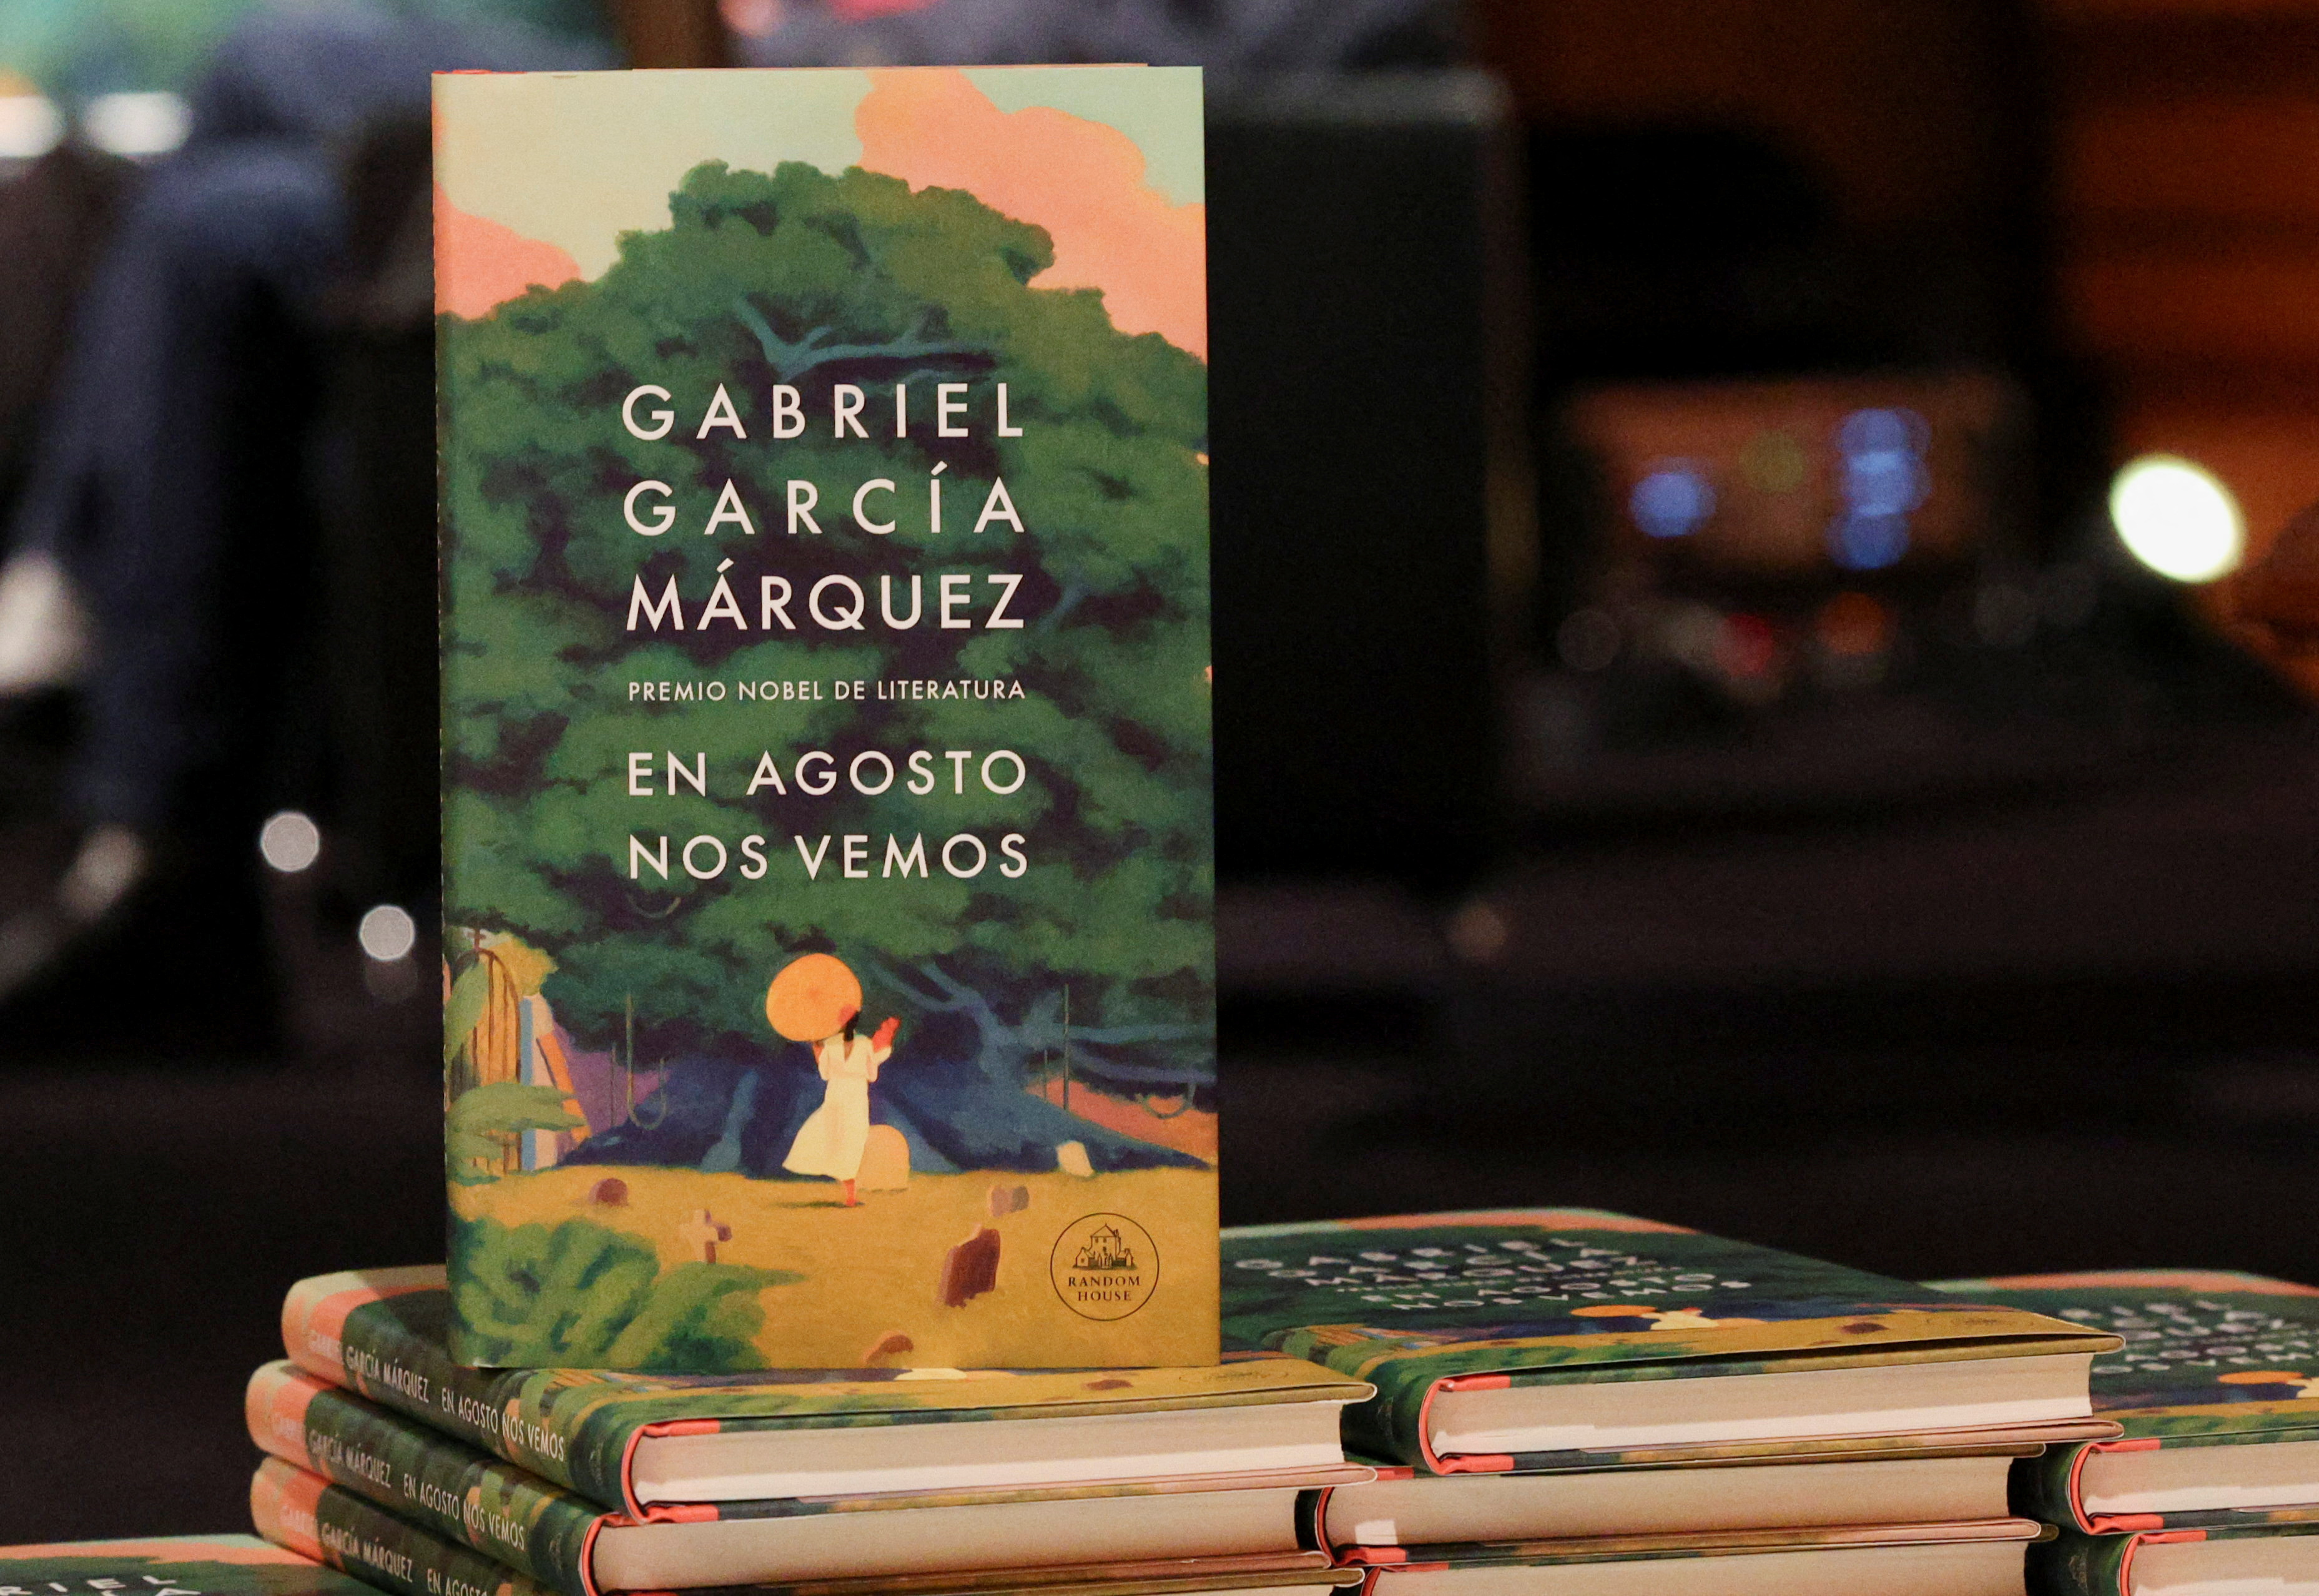 Sons of Colombian author Garcia Marquez unveil his posthumous book